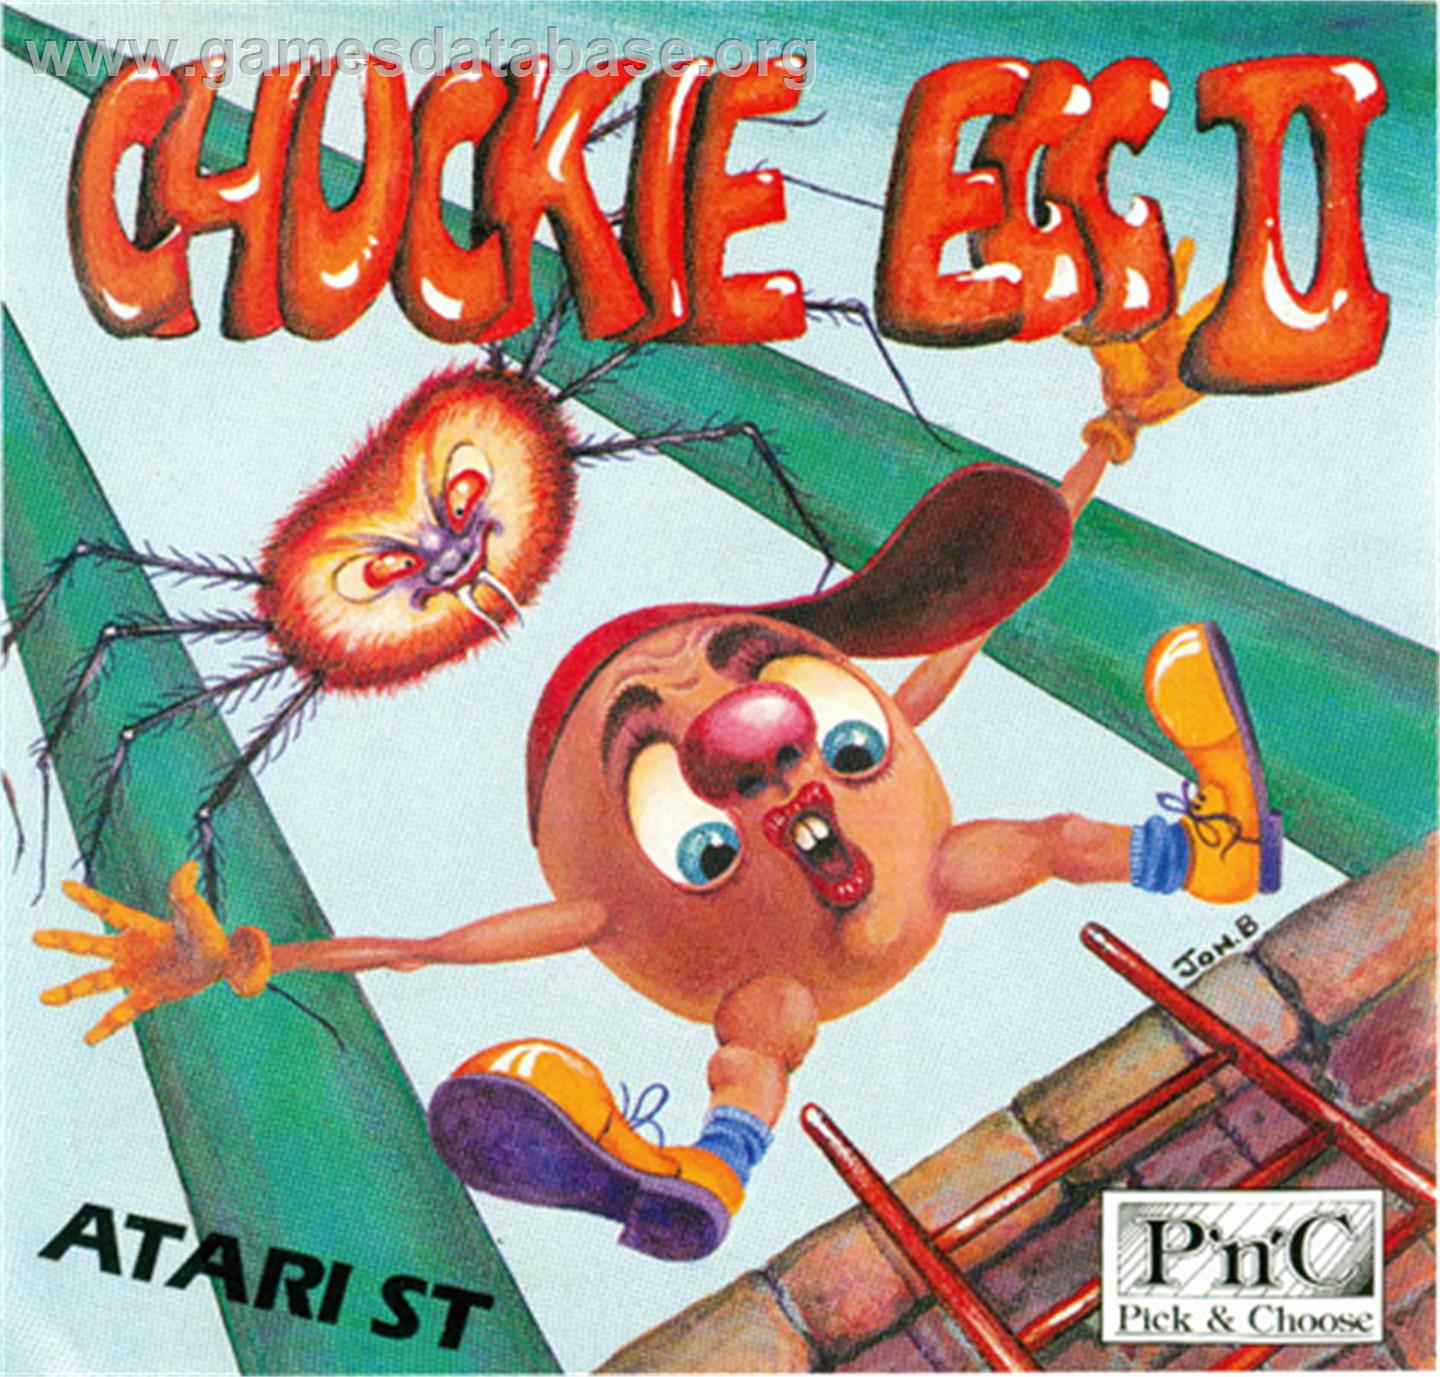 Chuckie Egg 2 - Atari ST - Artwork - Box